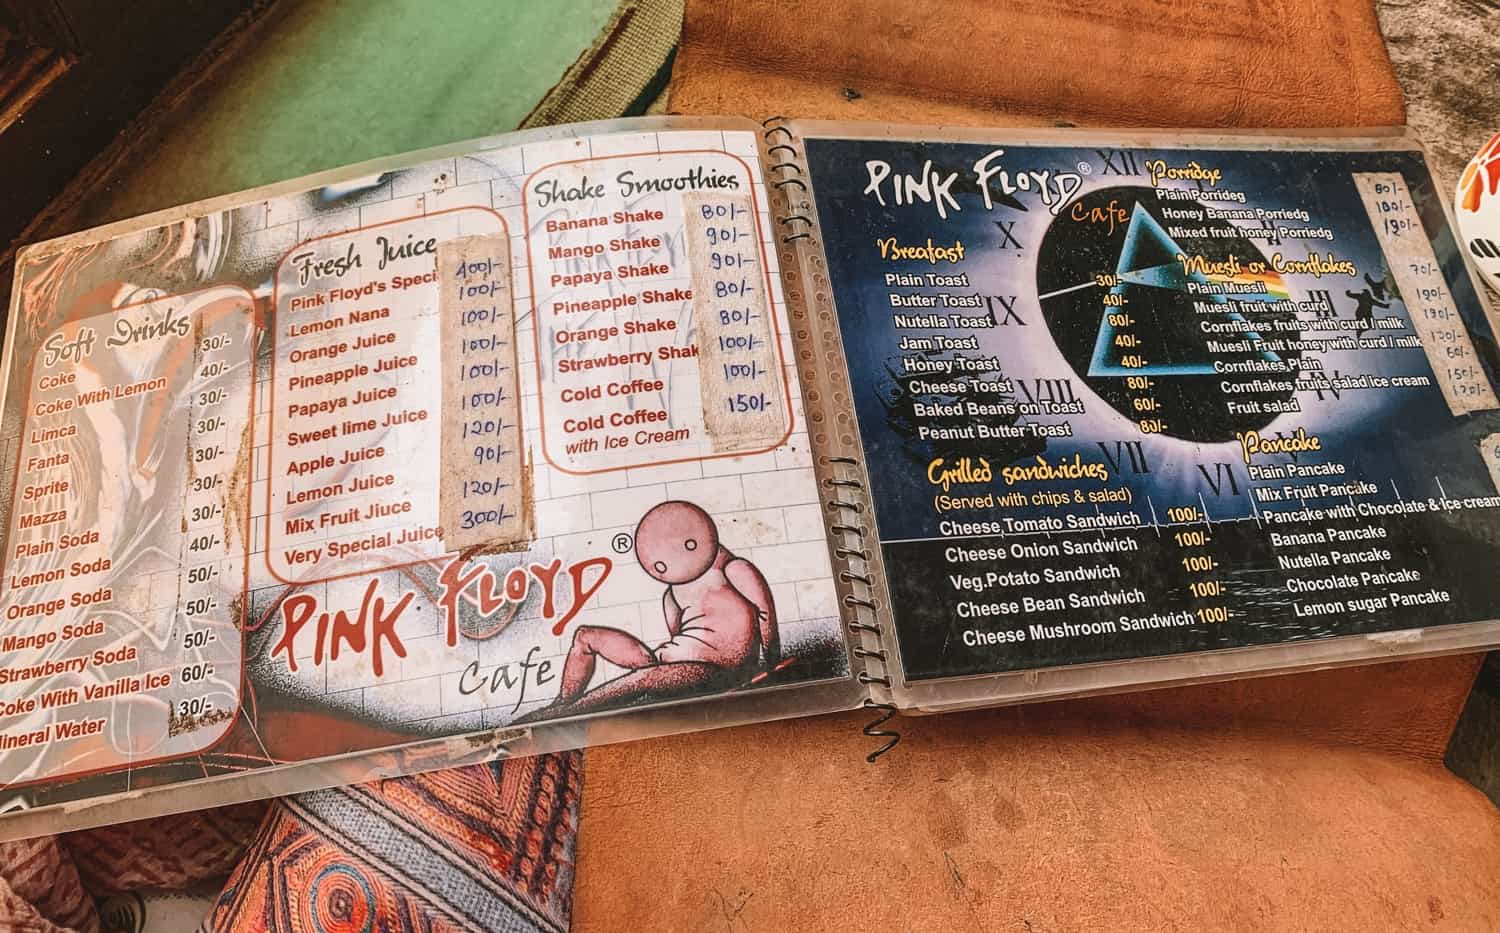 Pink Floyd Cafe menu in Pushkar India